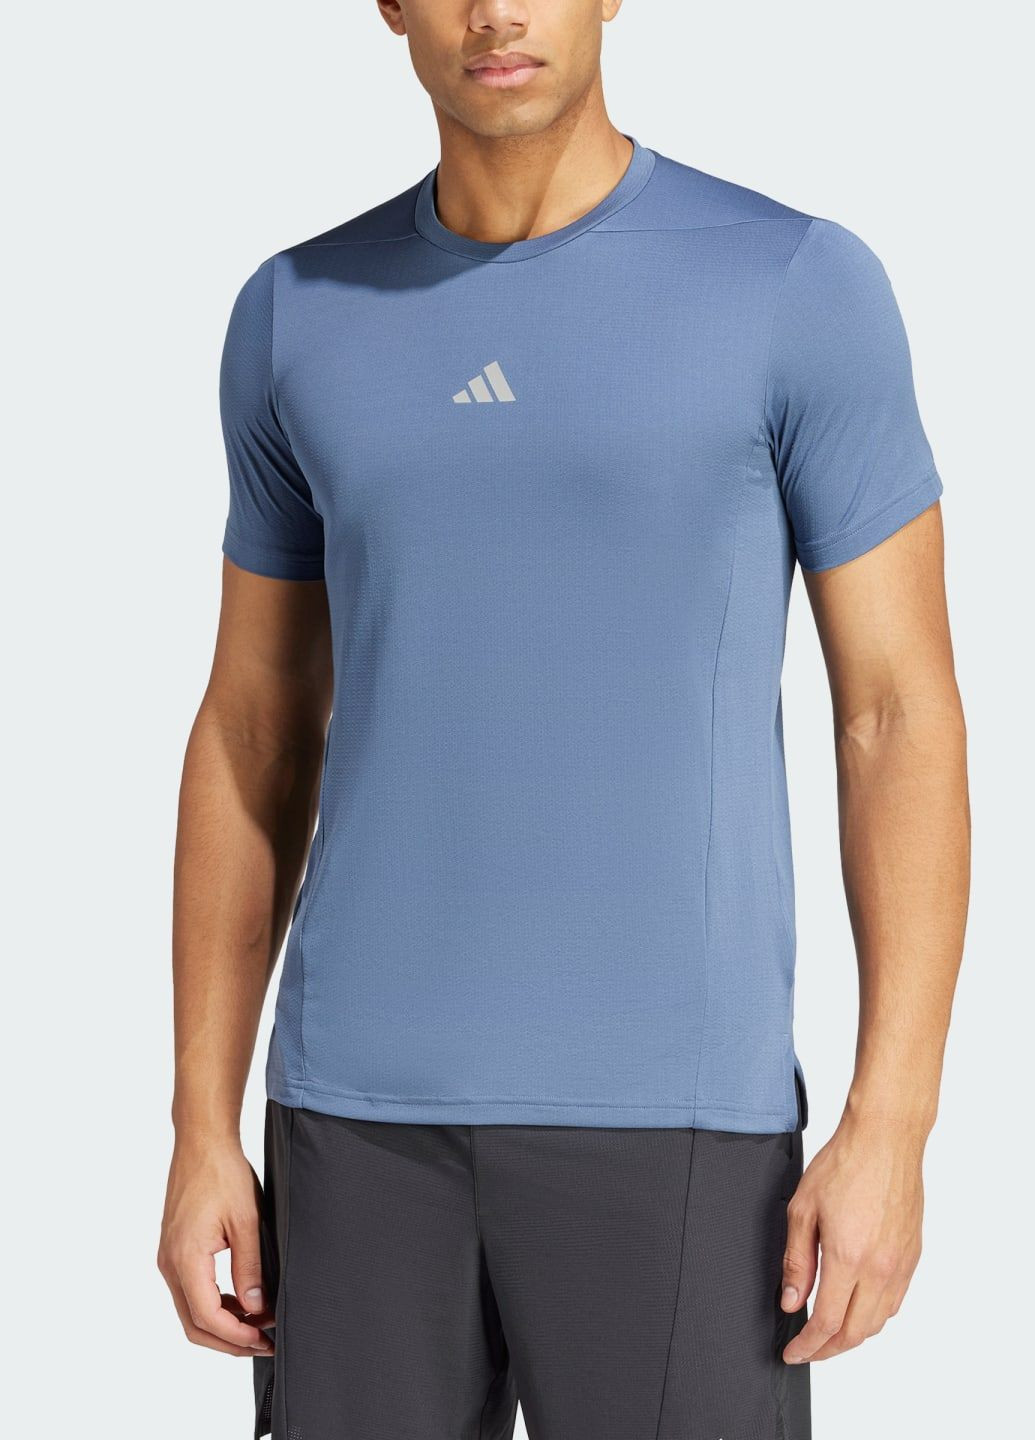 Синя футболка designed for training hiit workout heat.rdy adidas